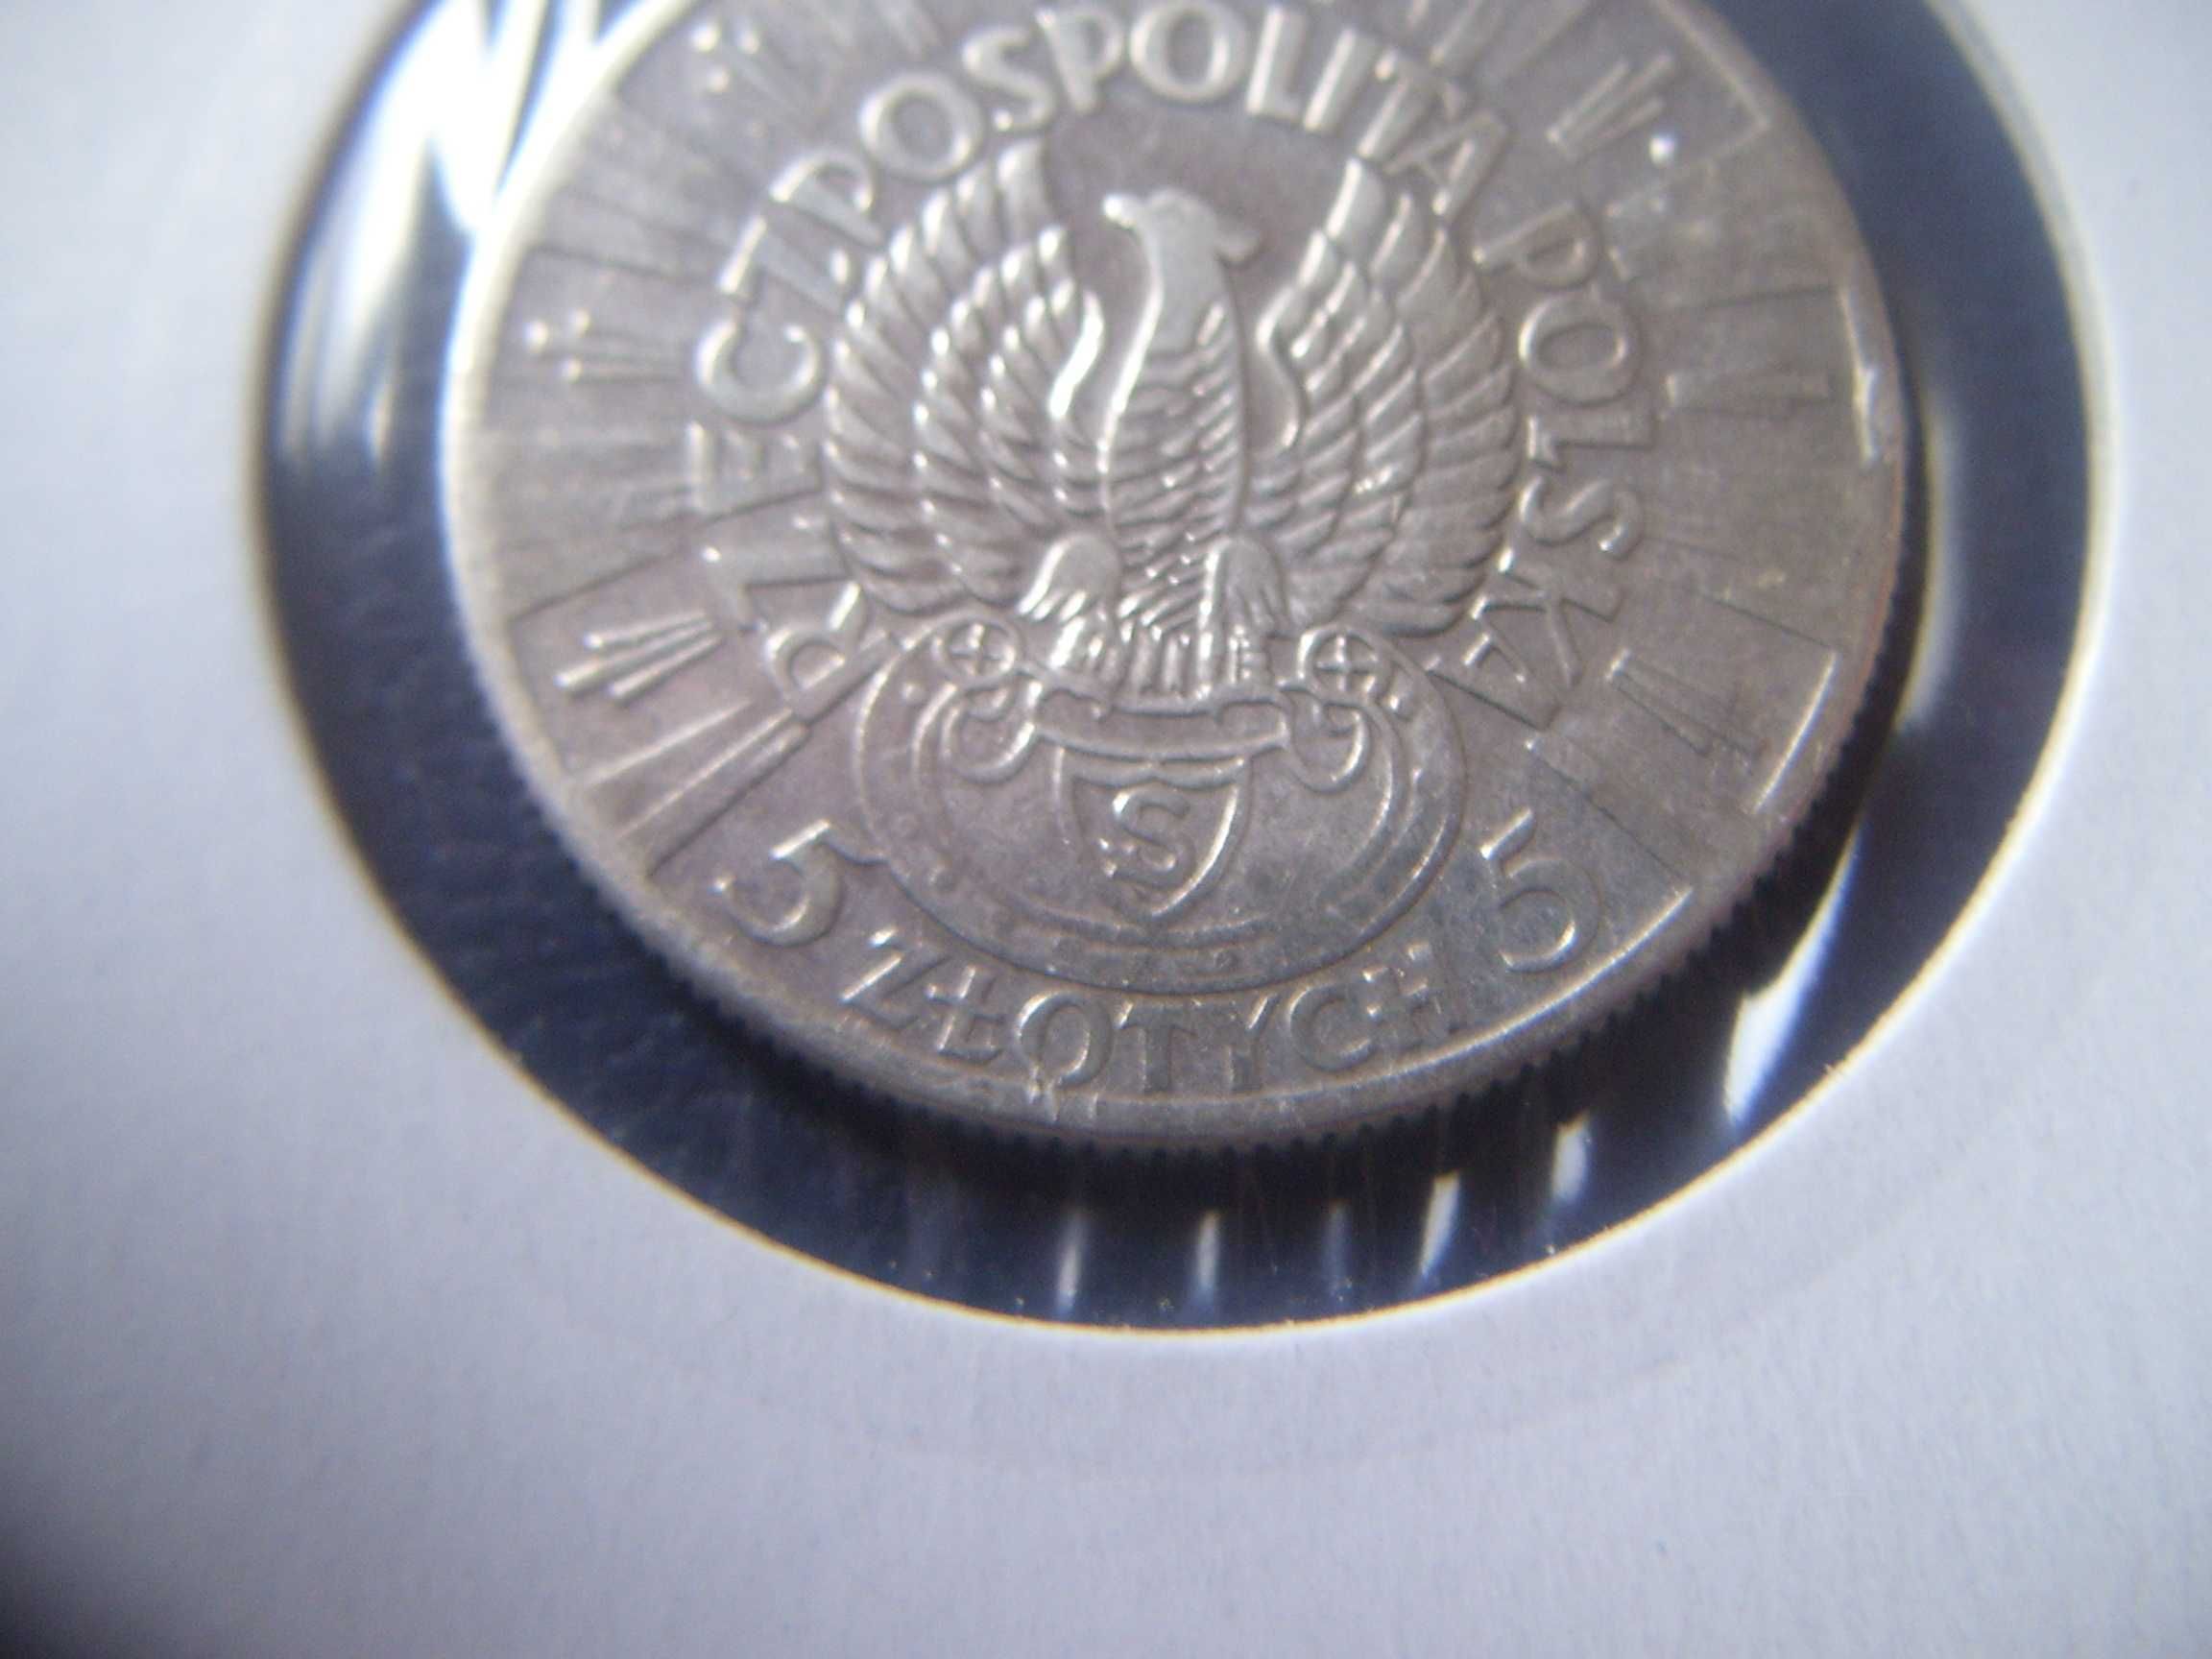 Stare monety L 5 złotych 1934 Strzelecki 2RP srebro